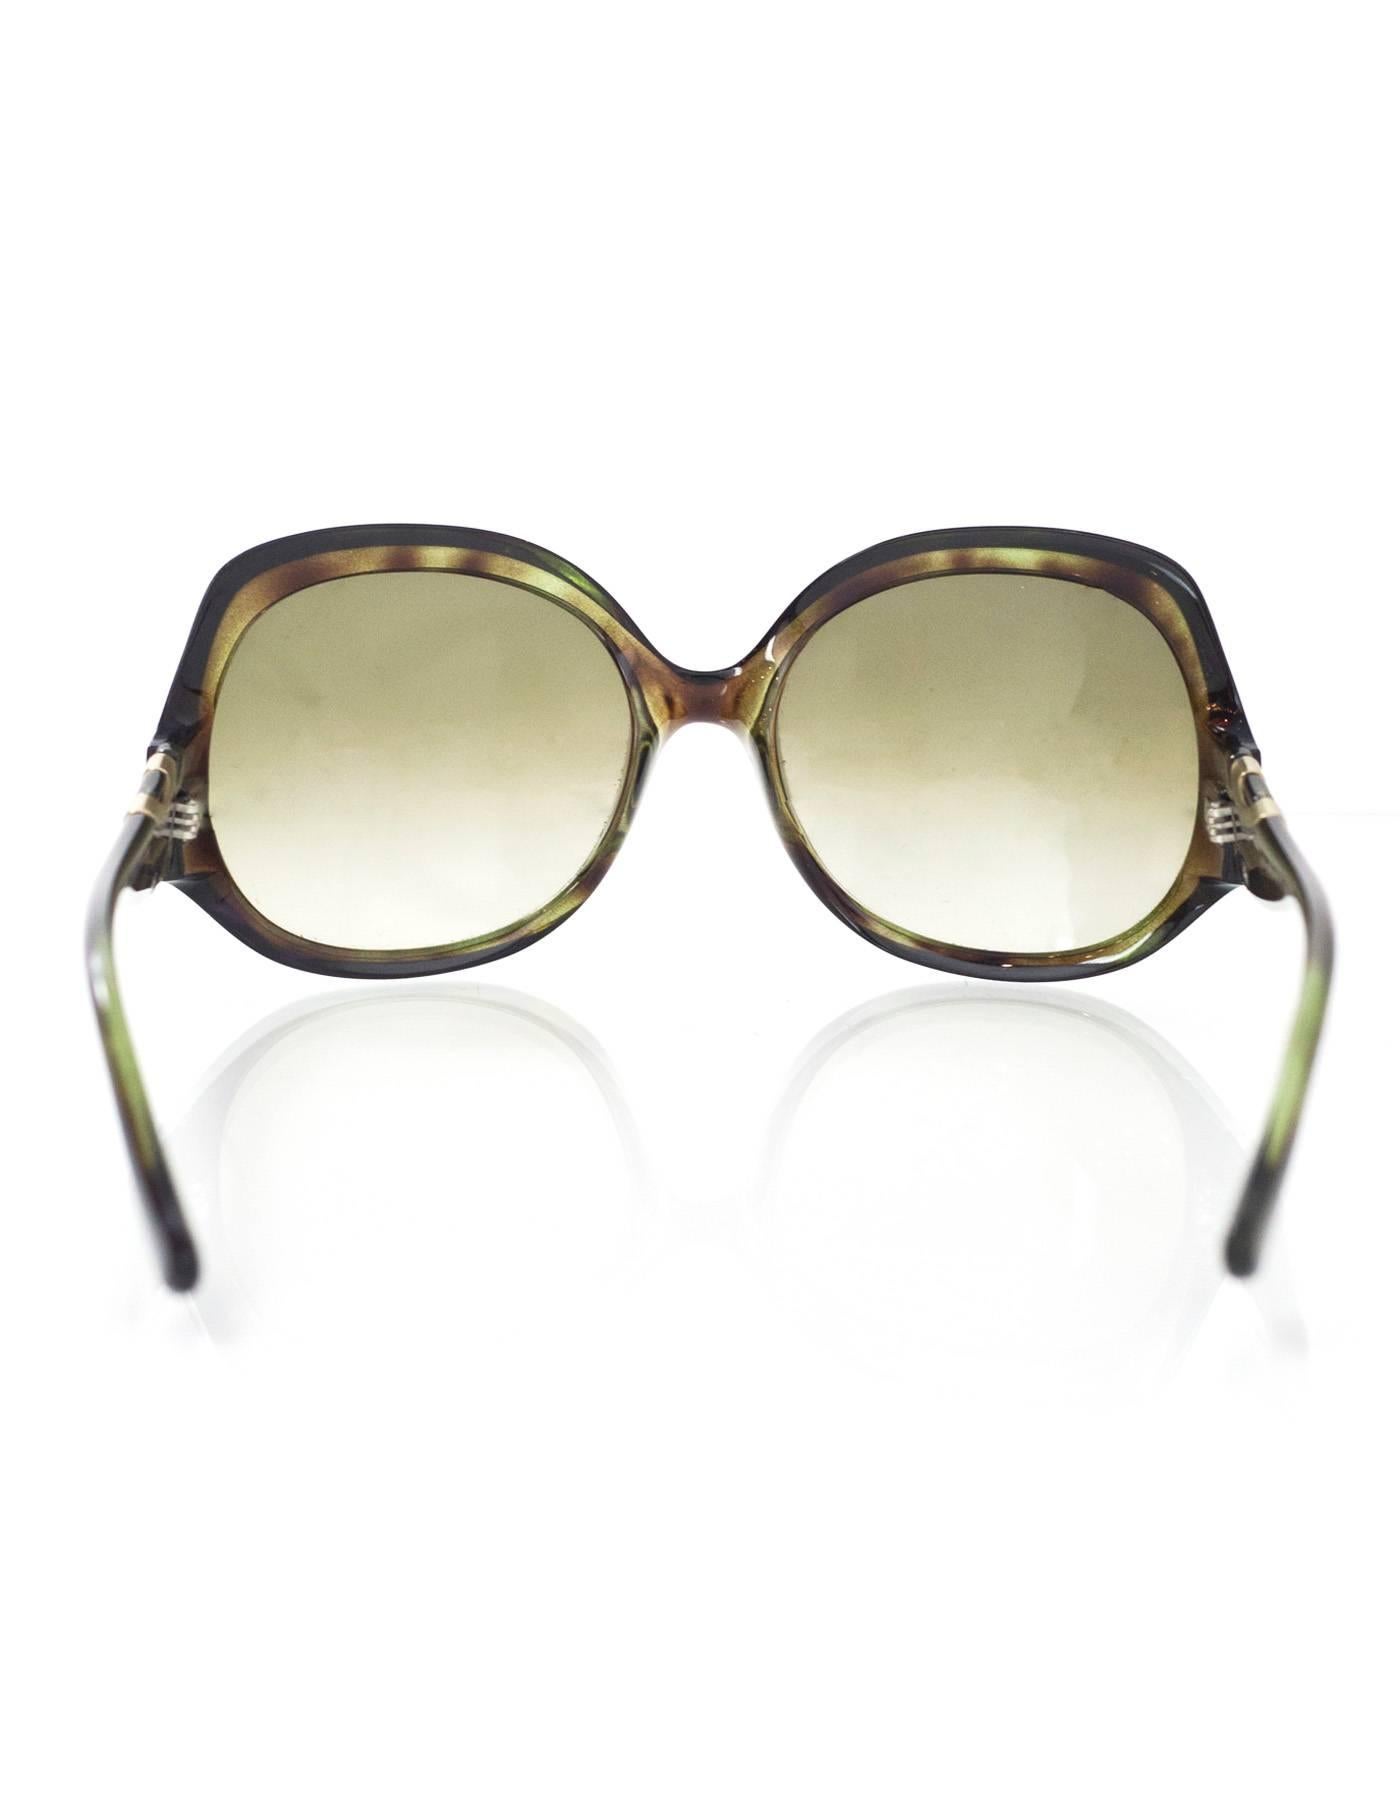 Beige Fendi Green Tortoise Sunglasses with Case